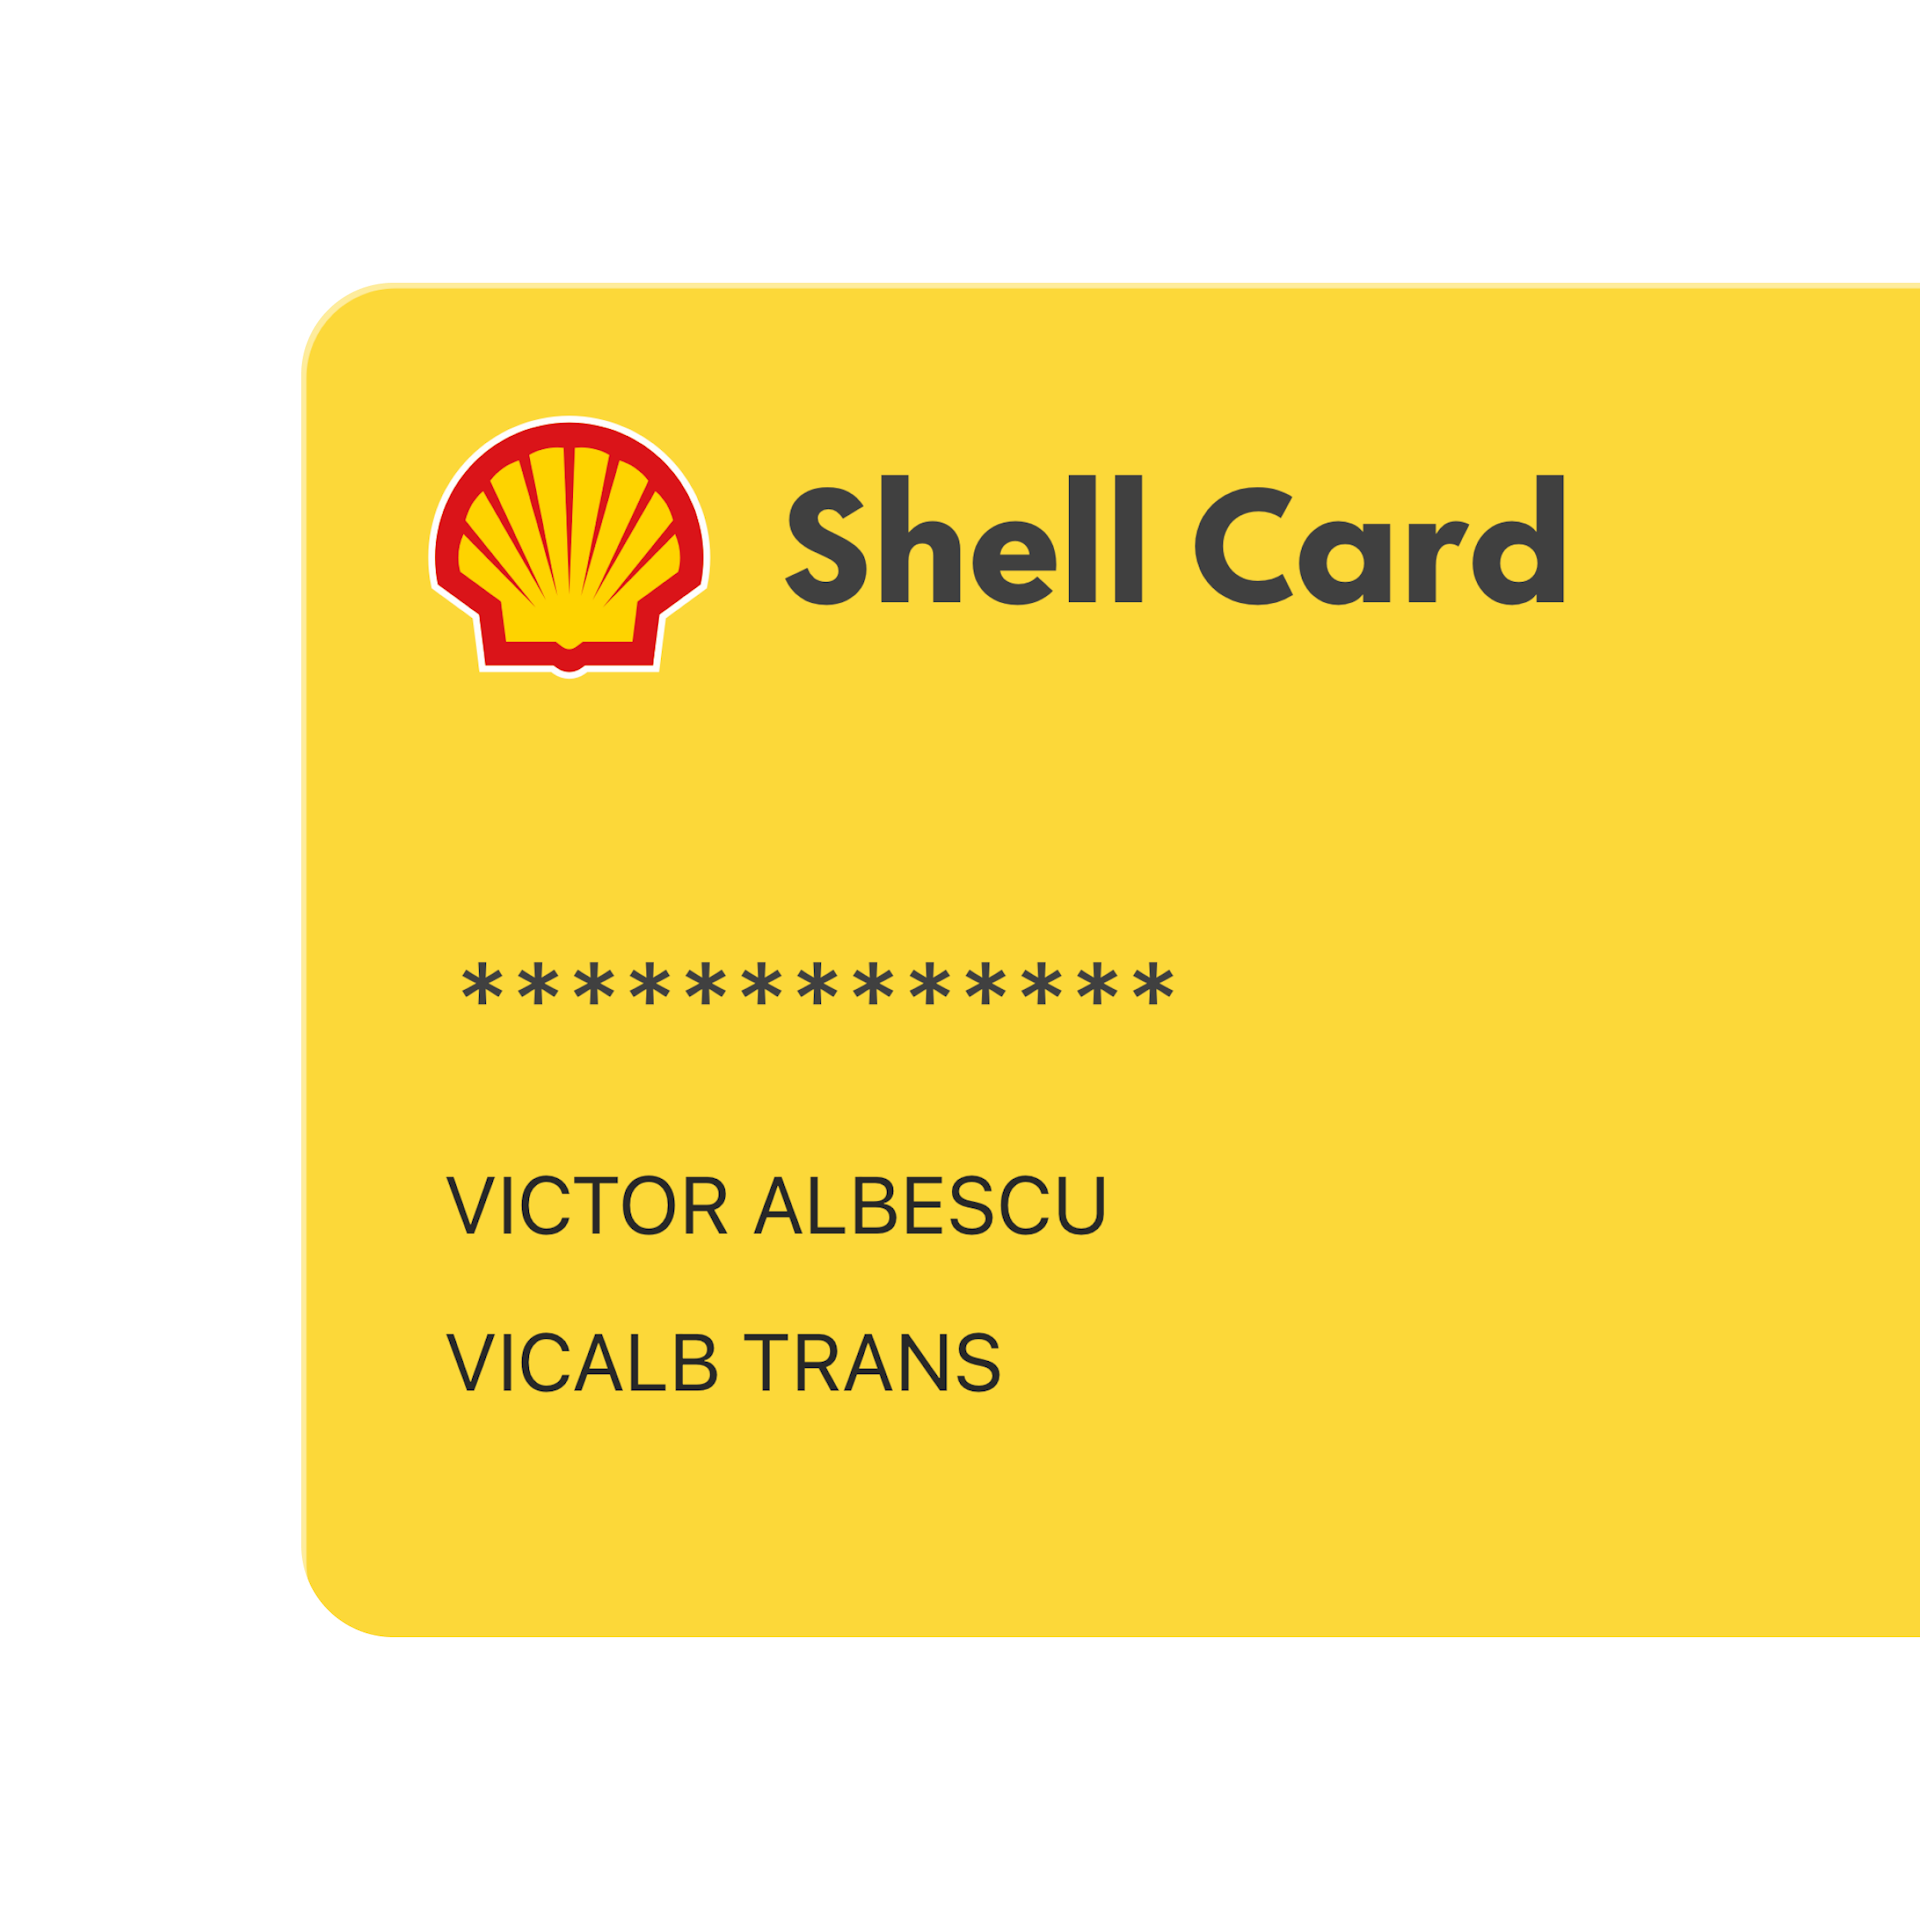 Shell card 